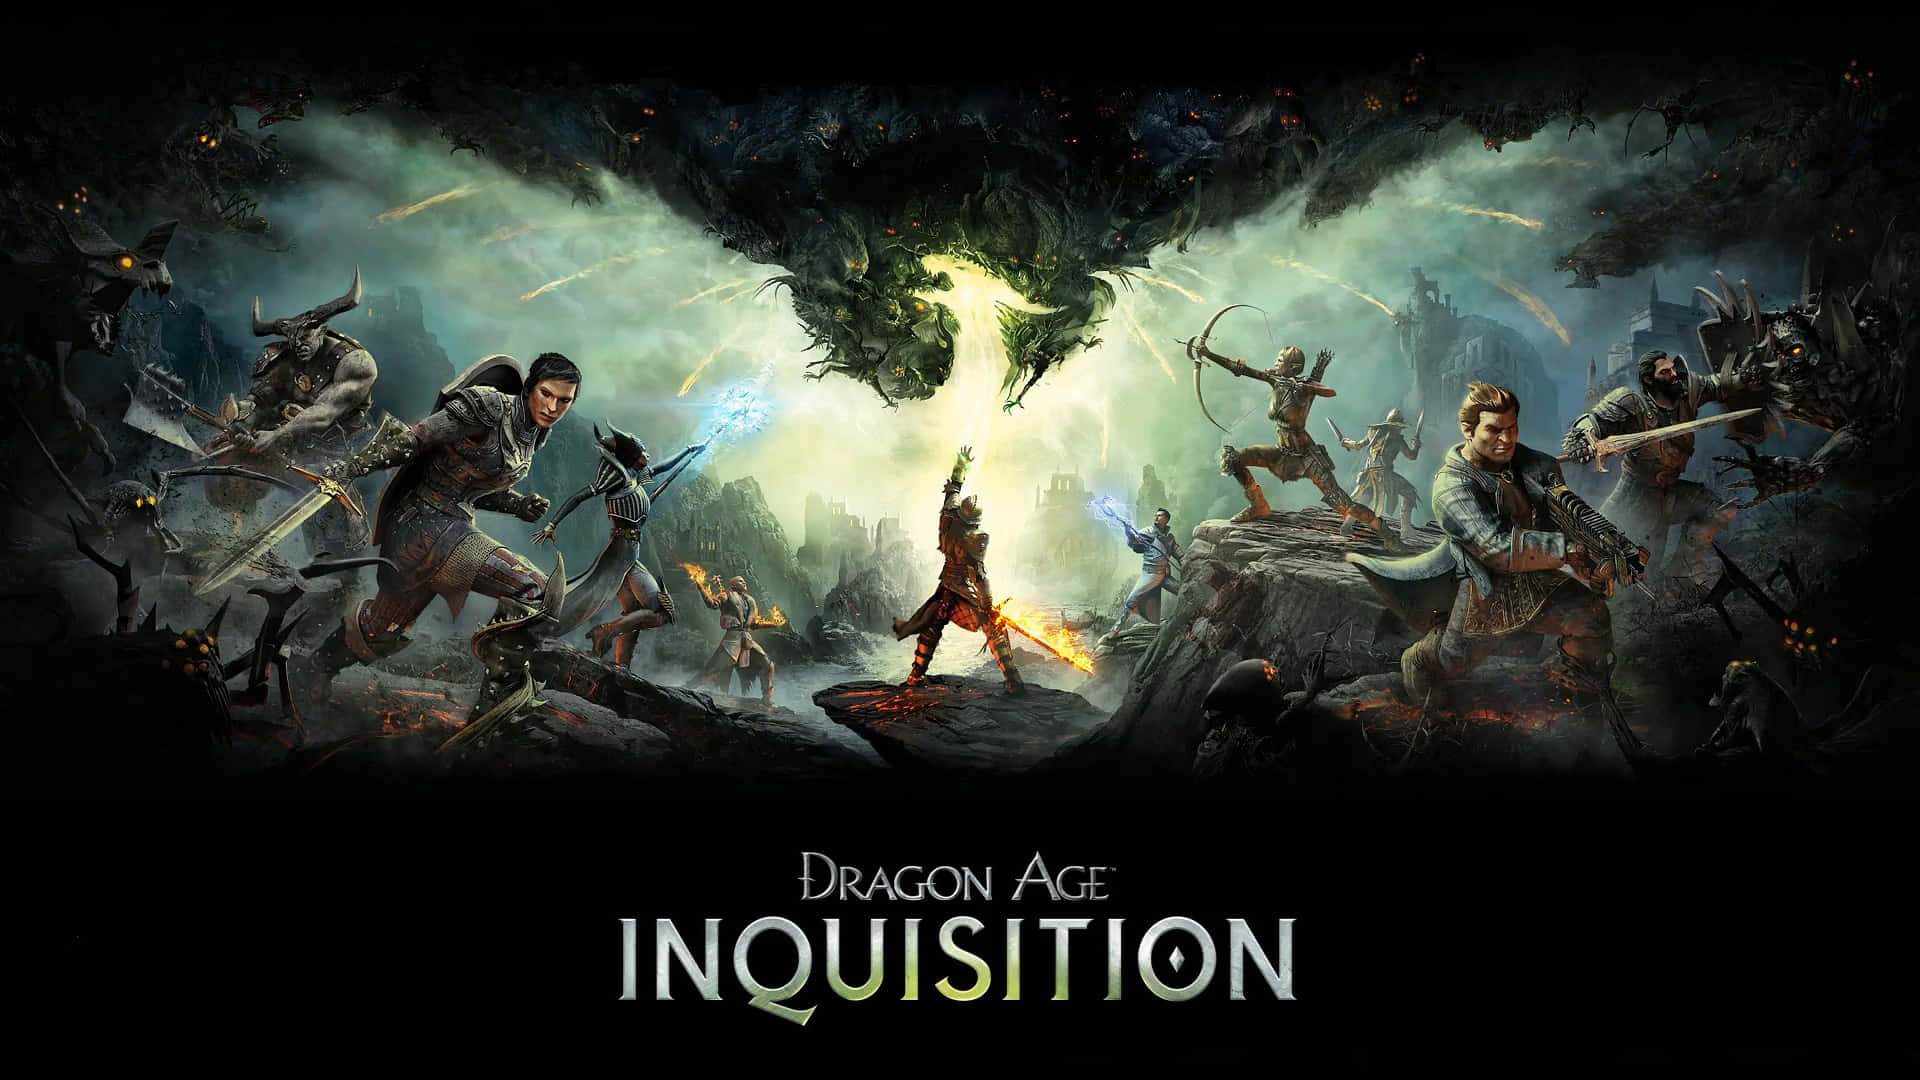 Explore the Epic World of Dragon Age Inquisition